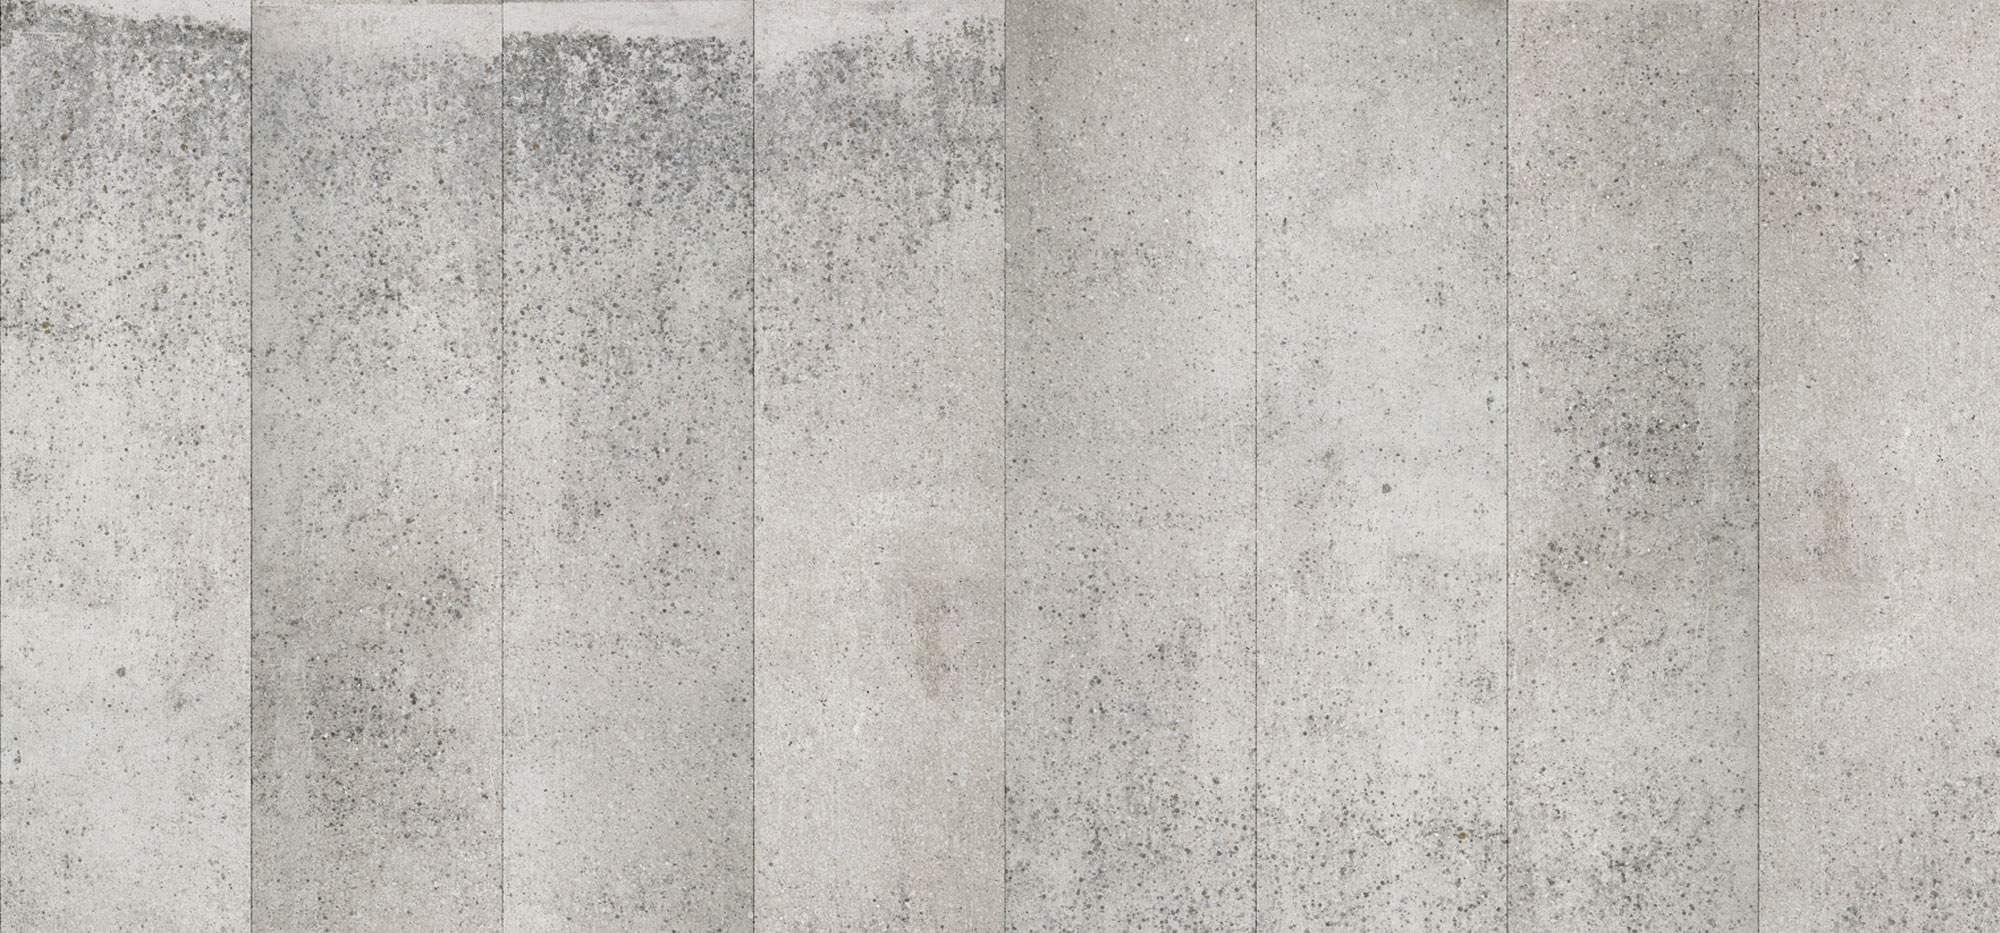 Concrete wallpaper